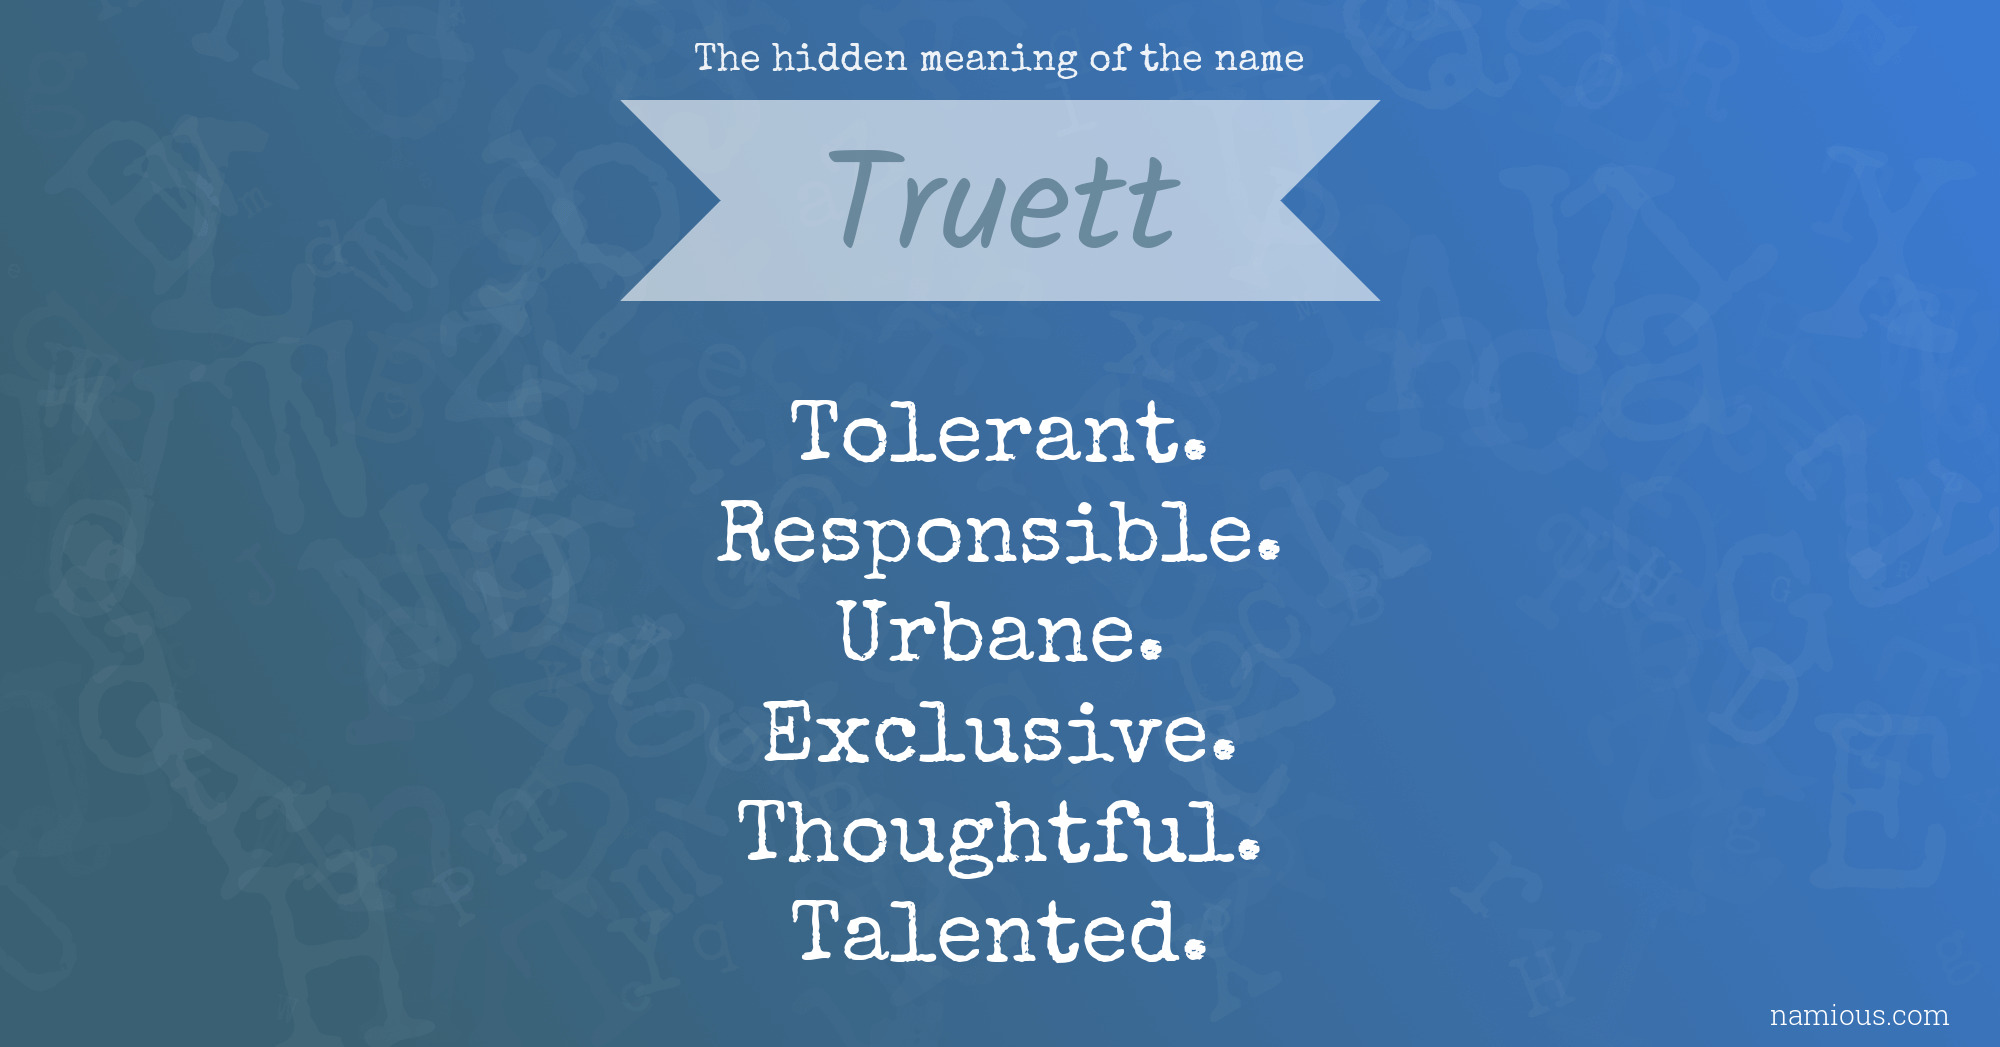 The hidden meaning of the name Truett